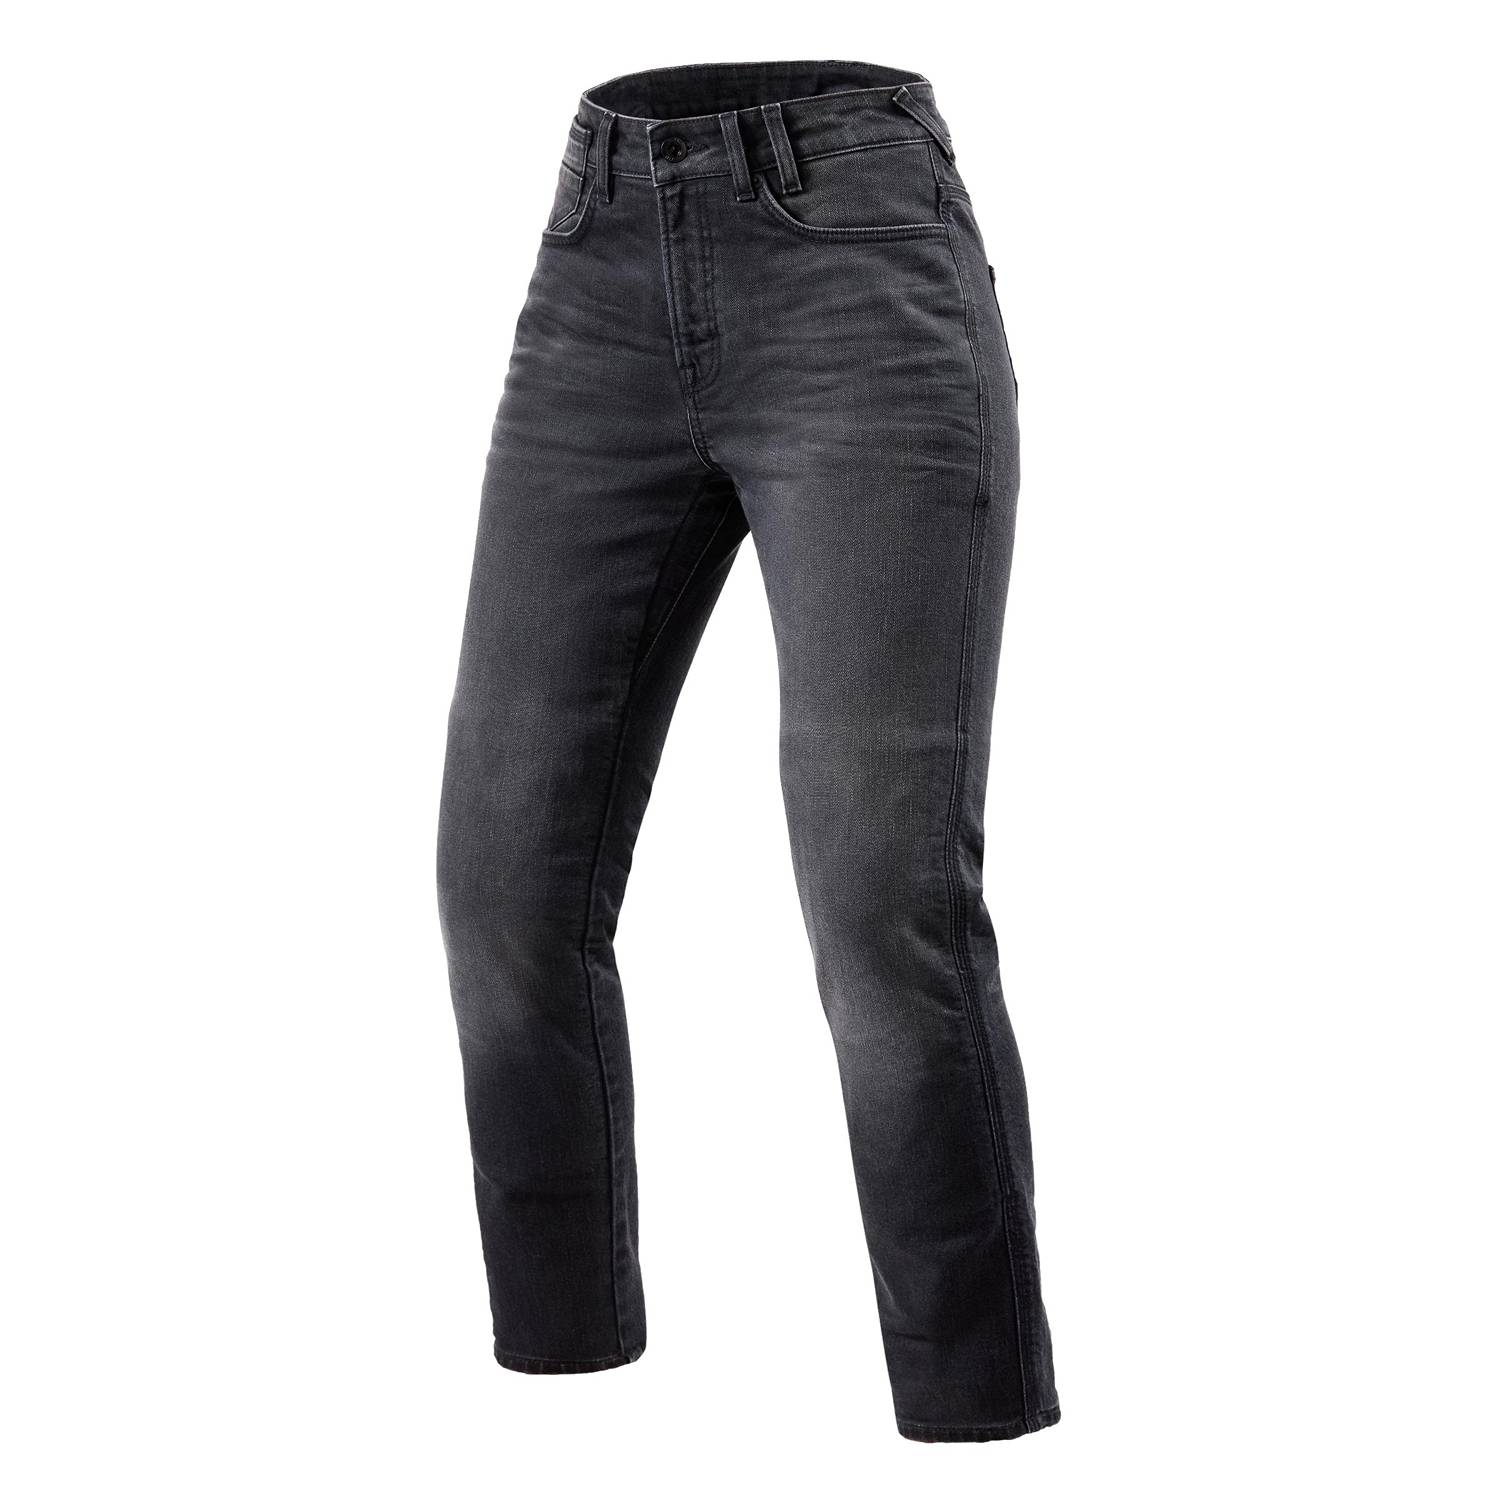 Image of REV'IT! Jeans Victoria 2 Ladies SF Mid Grey Used Motorcycle Jeans Size L32/W28 EN